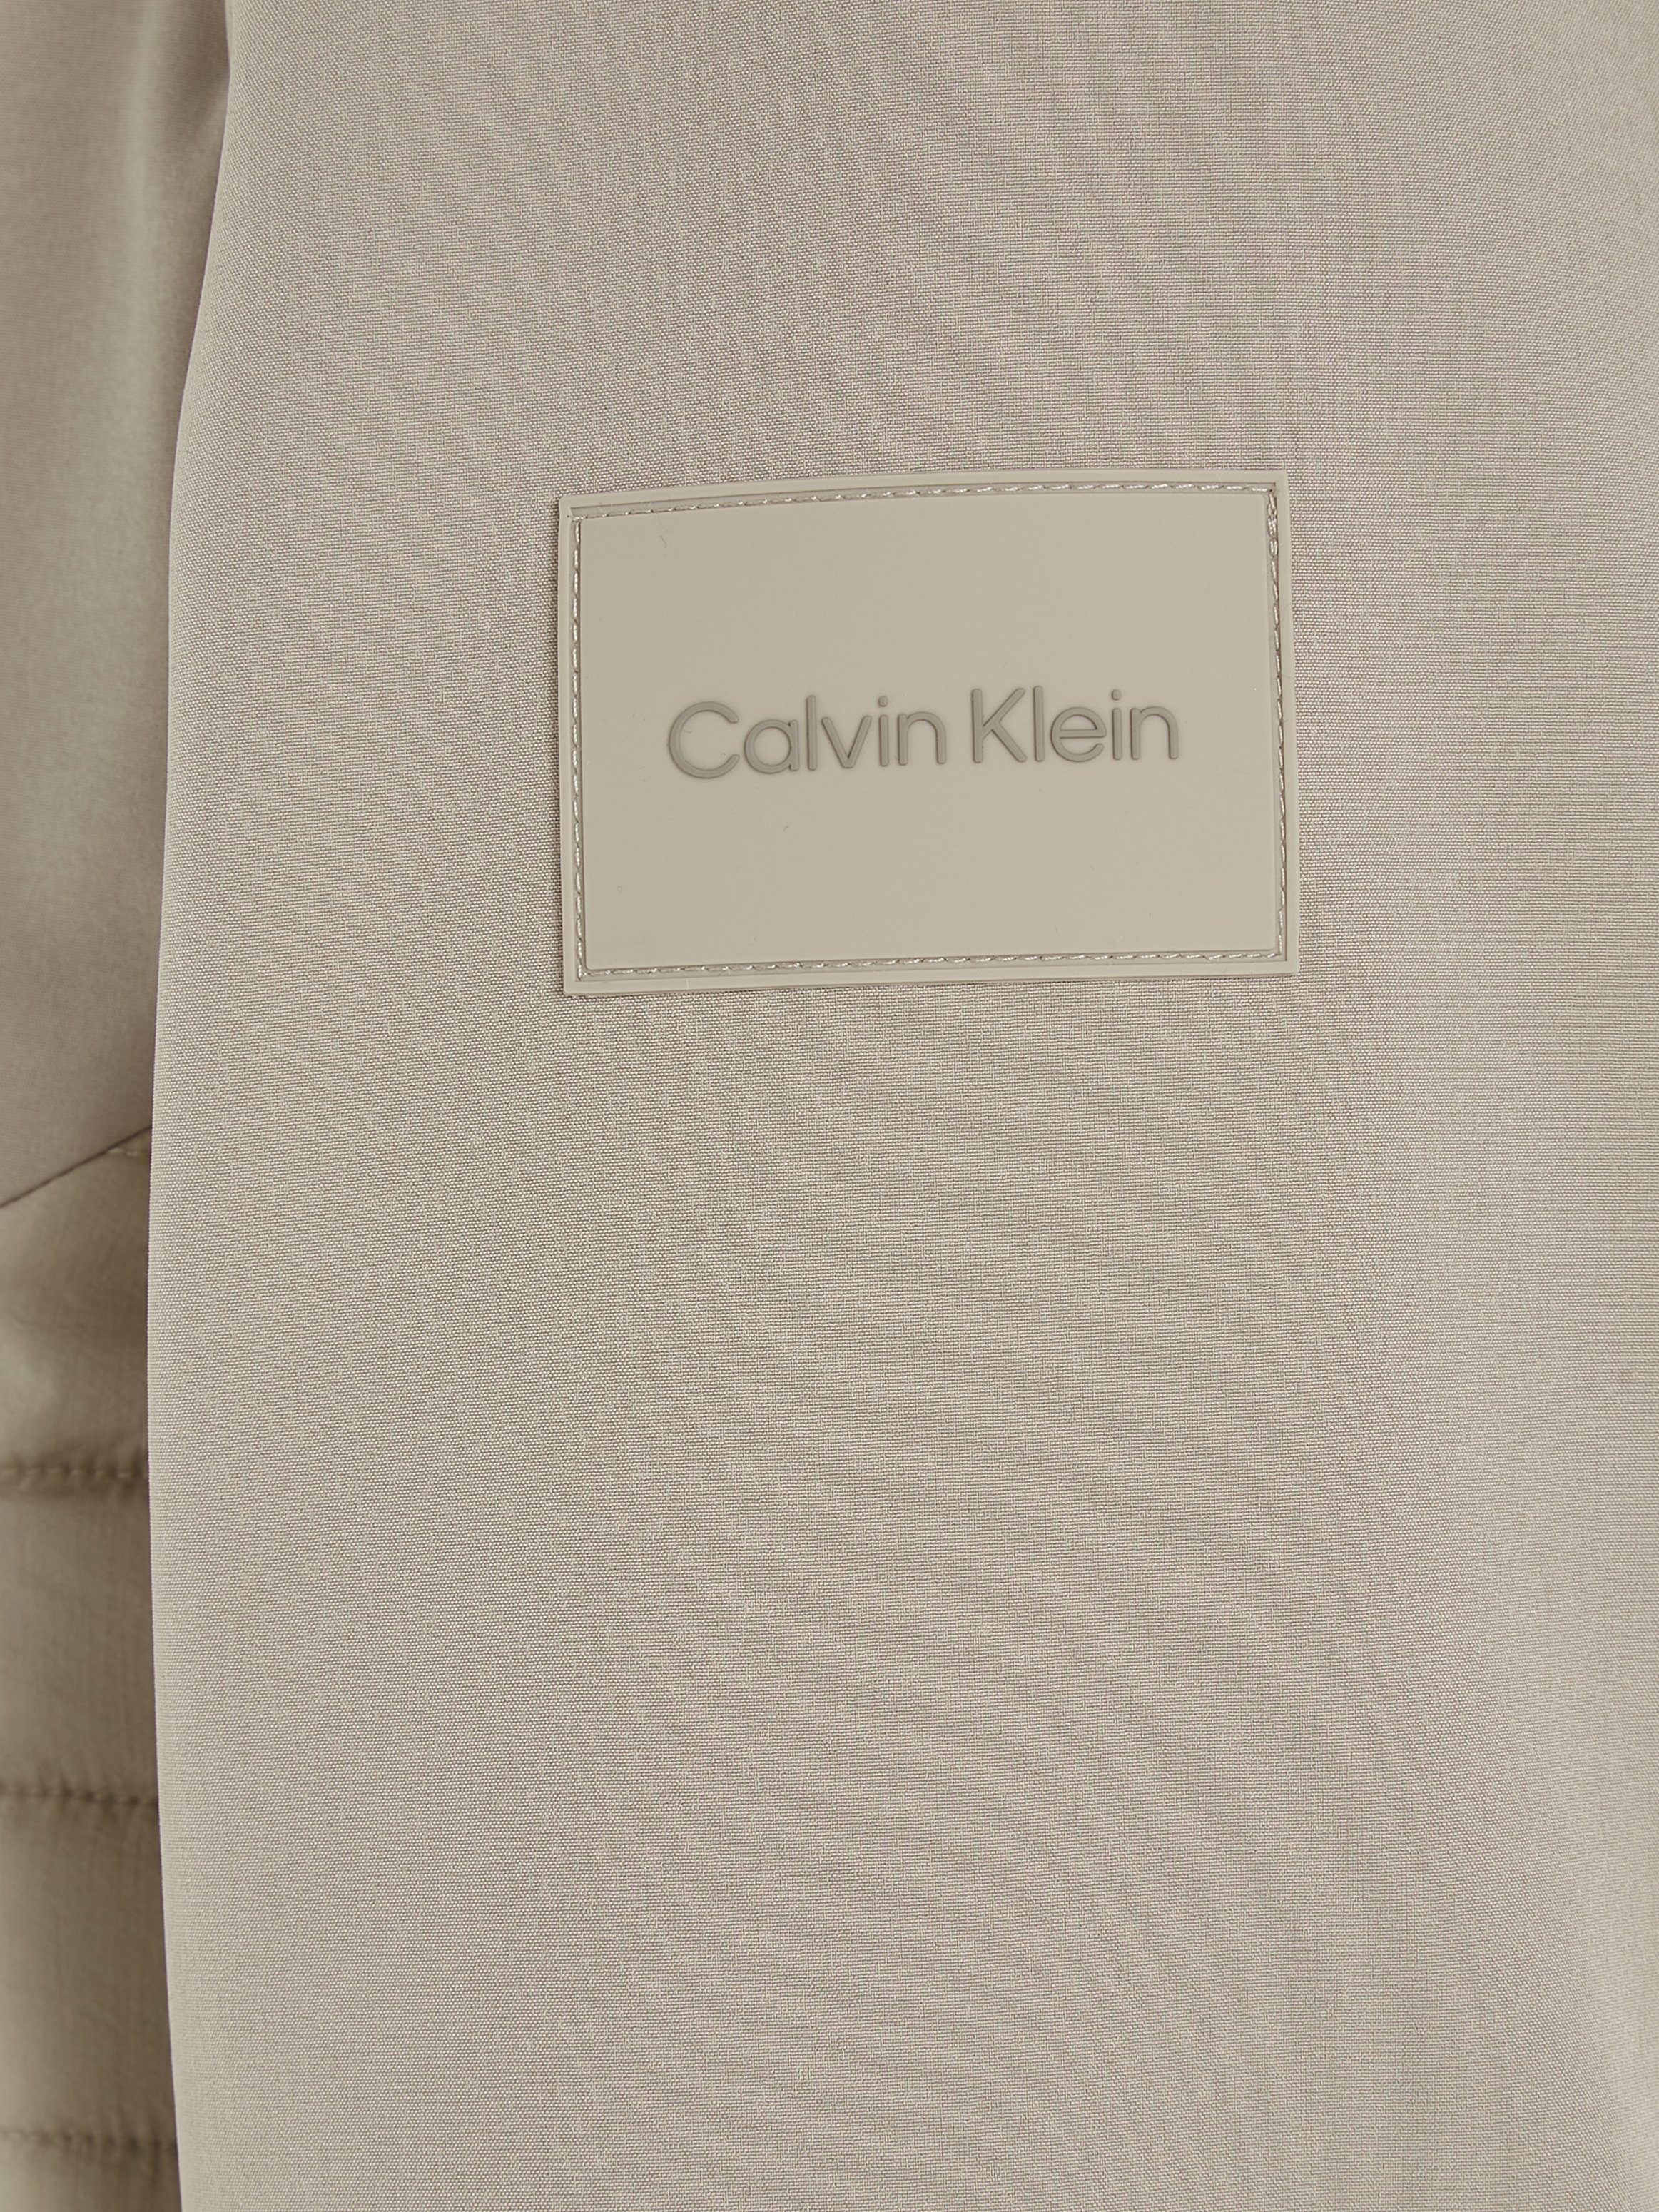 Clay QUILTED JACKET MIX MEDIA Calvin Klein Outdoorjacke HOOD Fresh